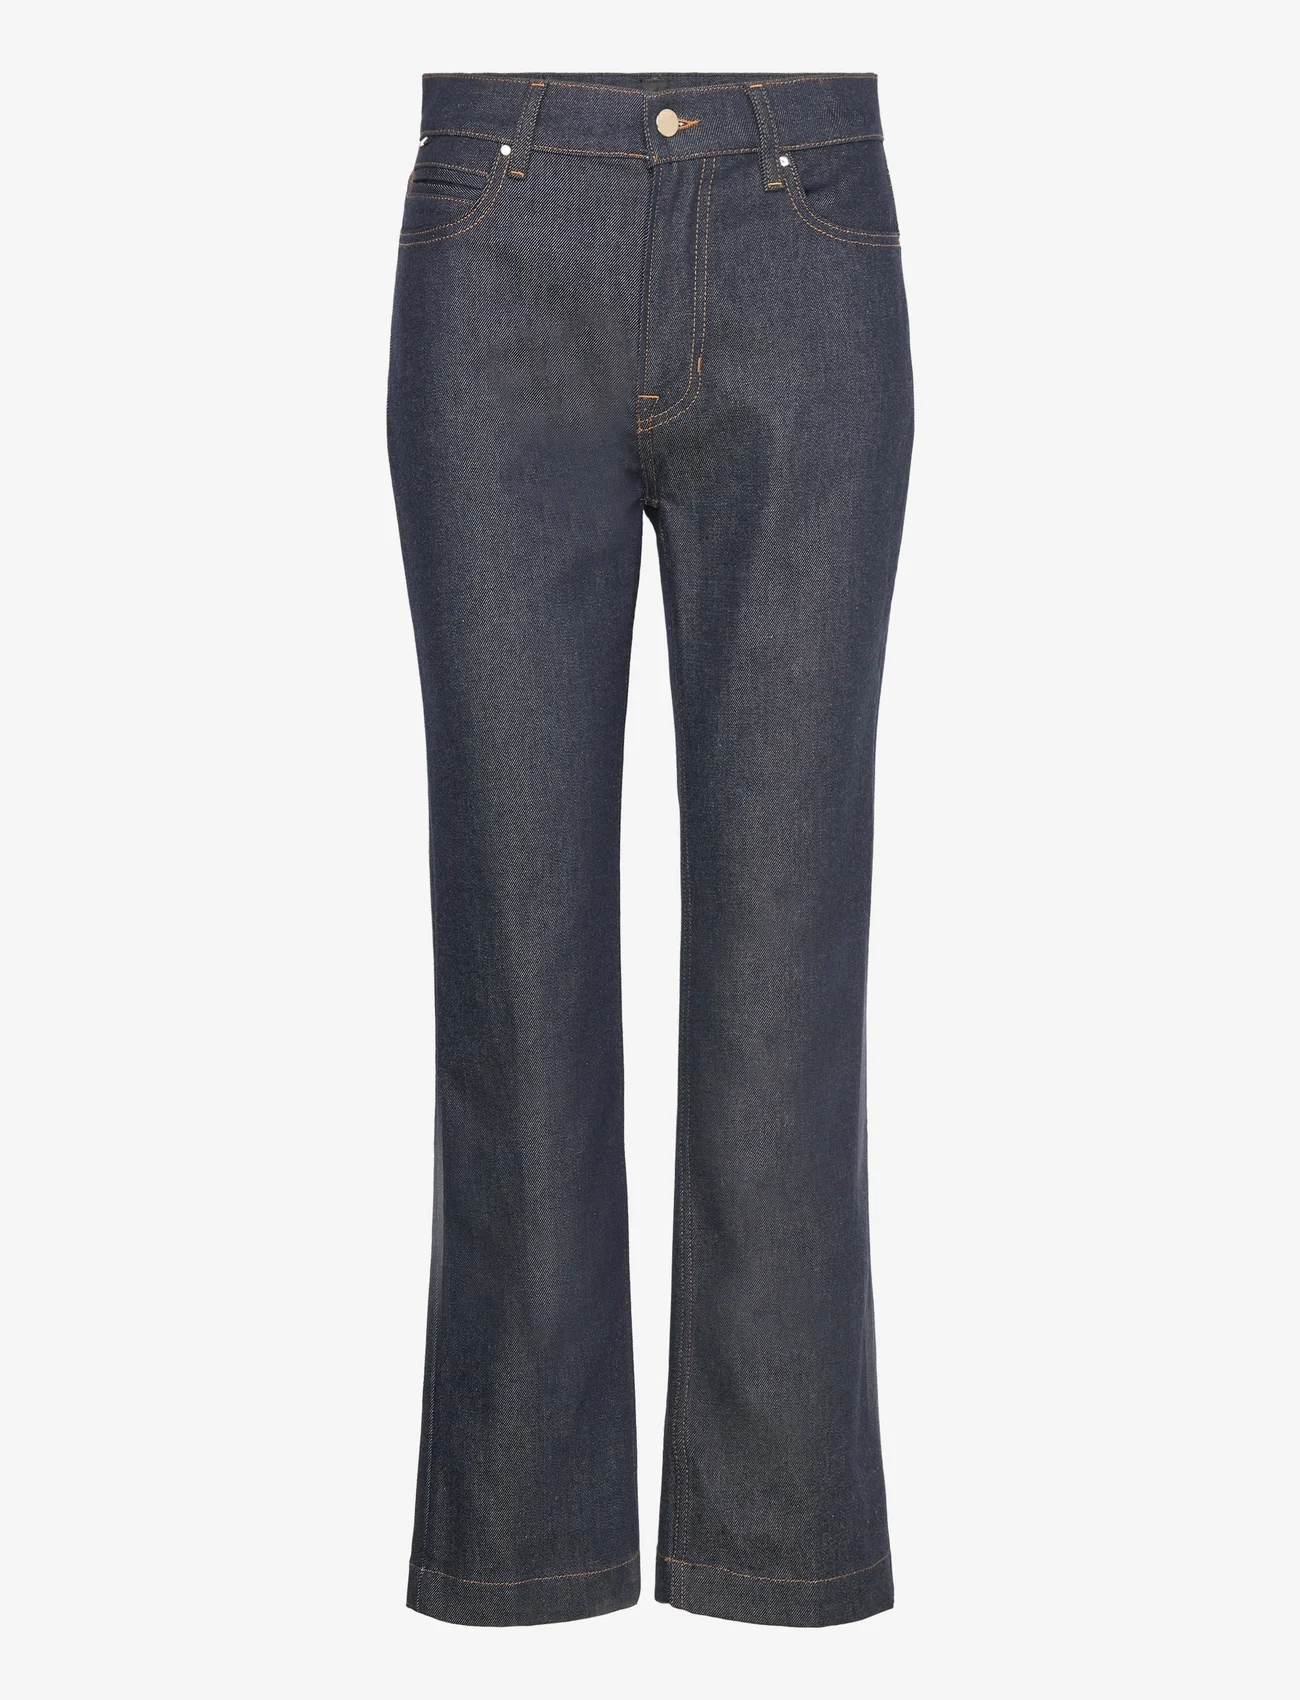 BOSS - ADA HR - straight jeans - blue - 0